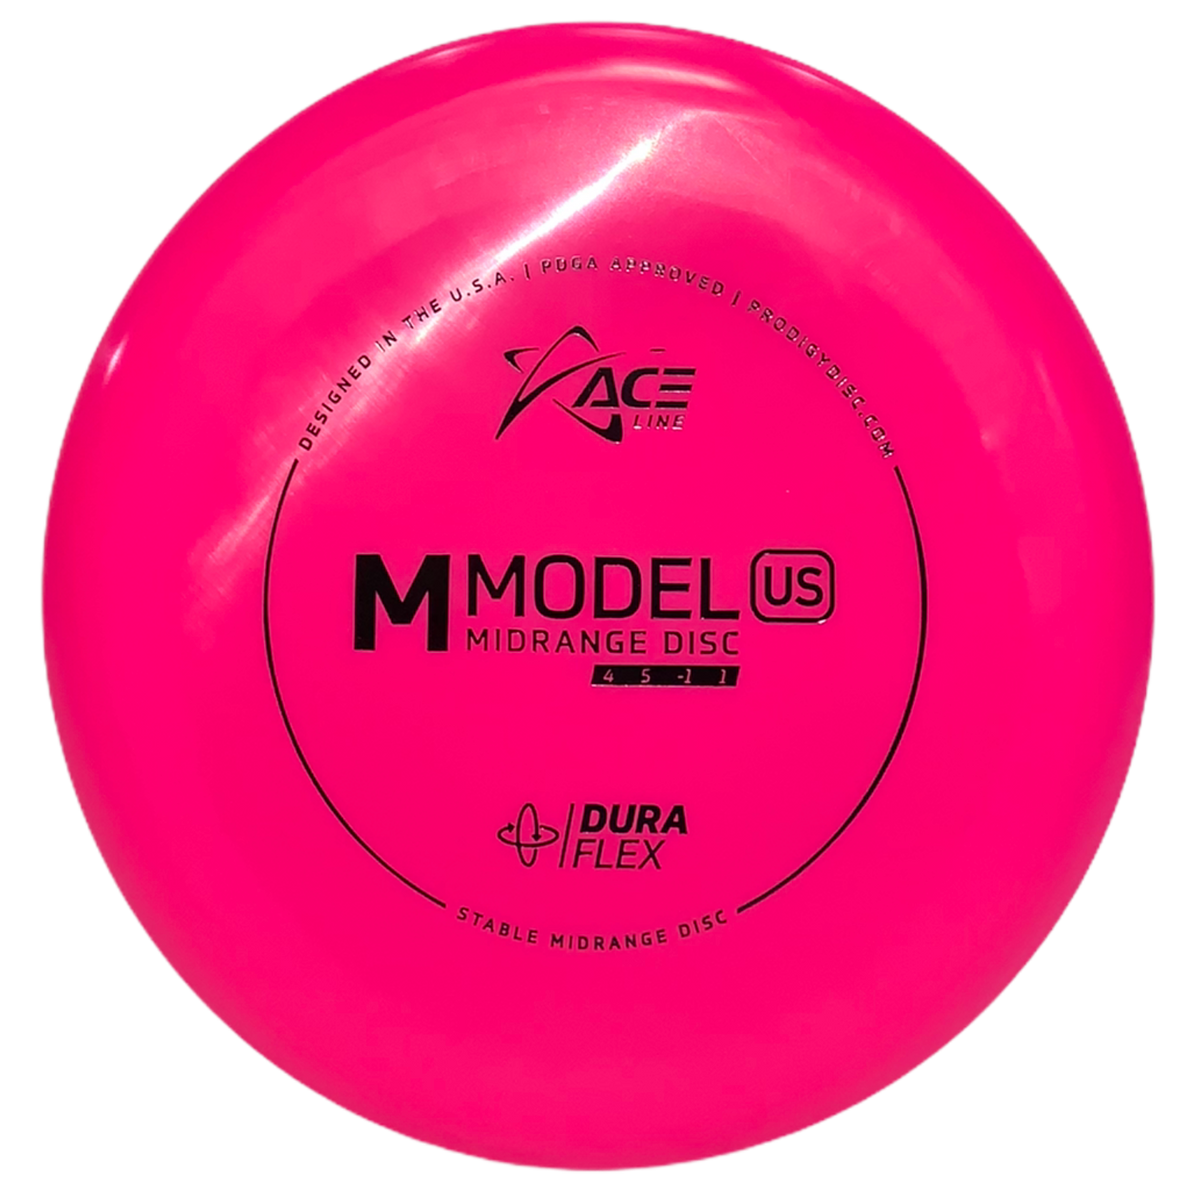 Prodigy Ace Line Duraflex M Model US